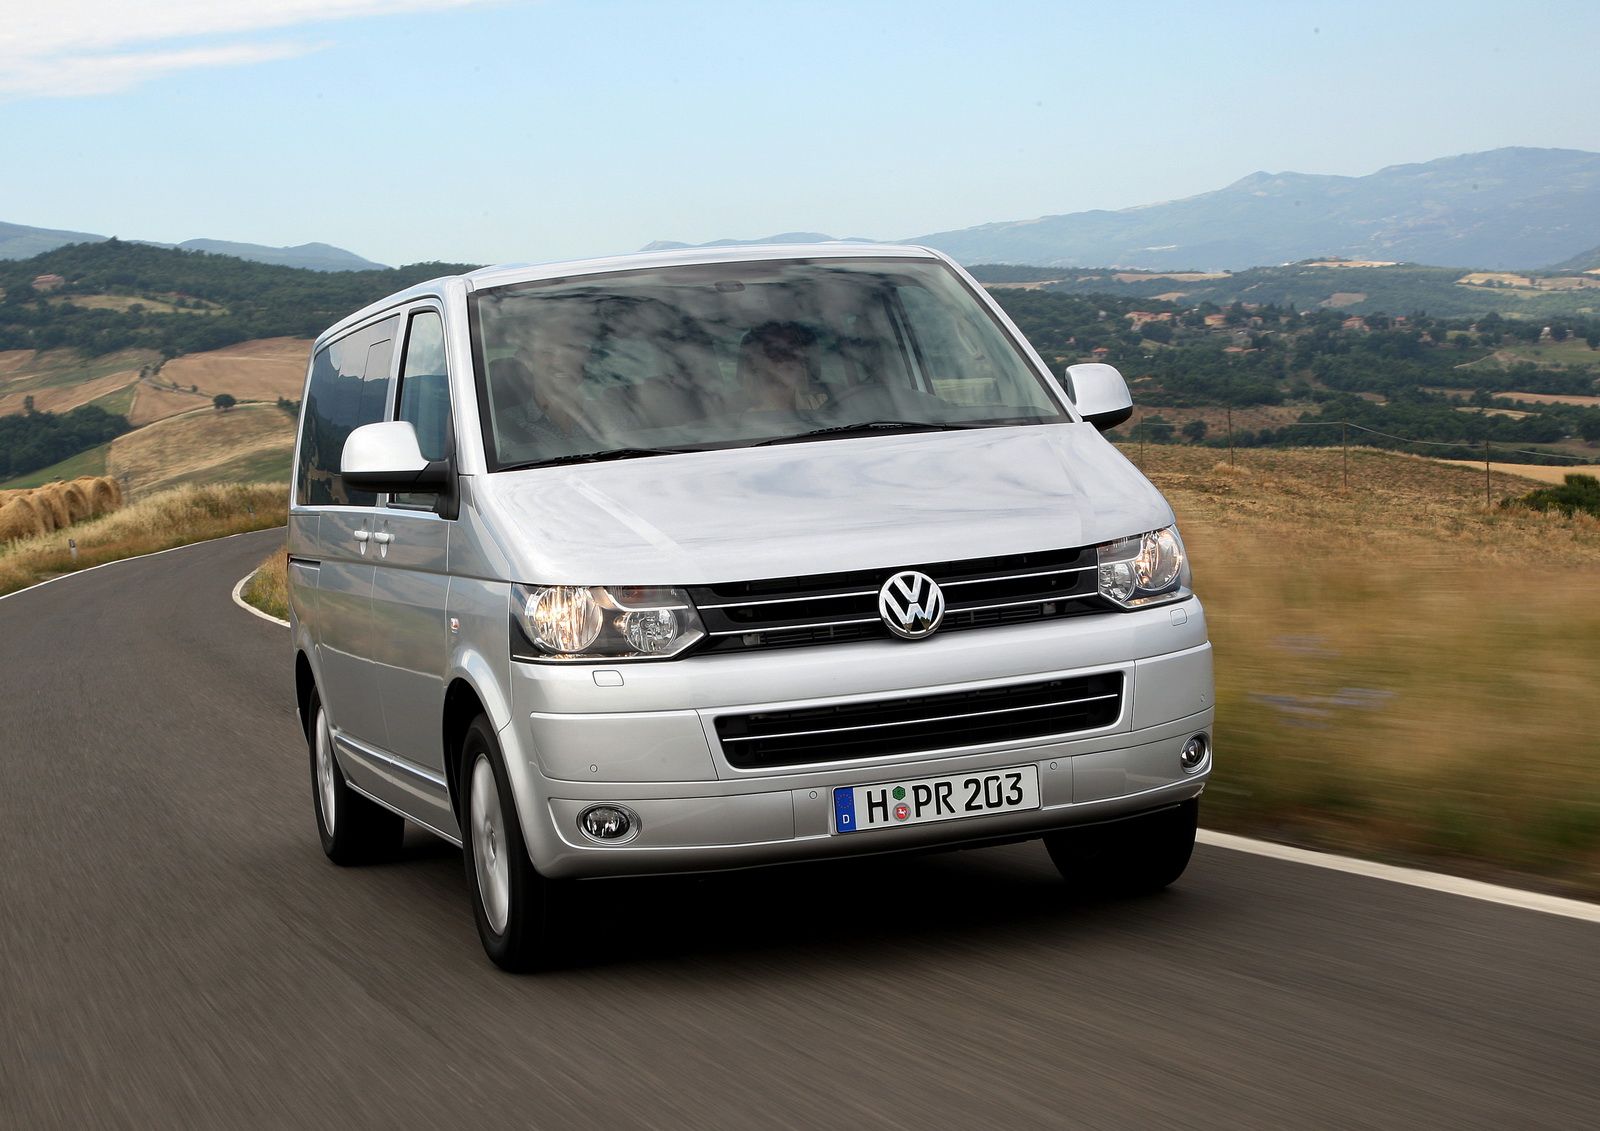 New 2010 Volkswagen T5 Van Facelift Officially Revealed (photos) Â» 2010